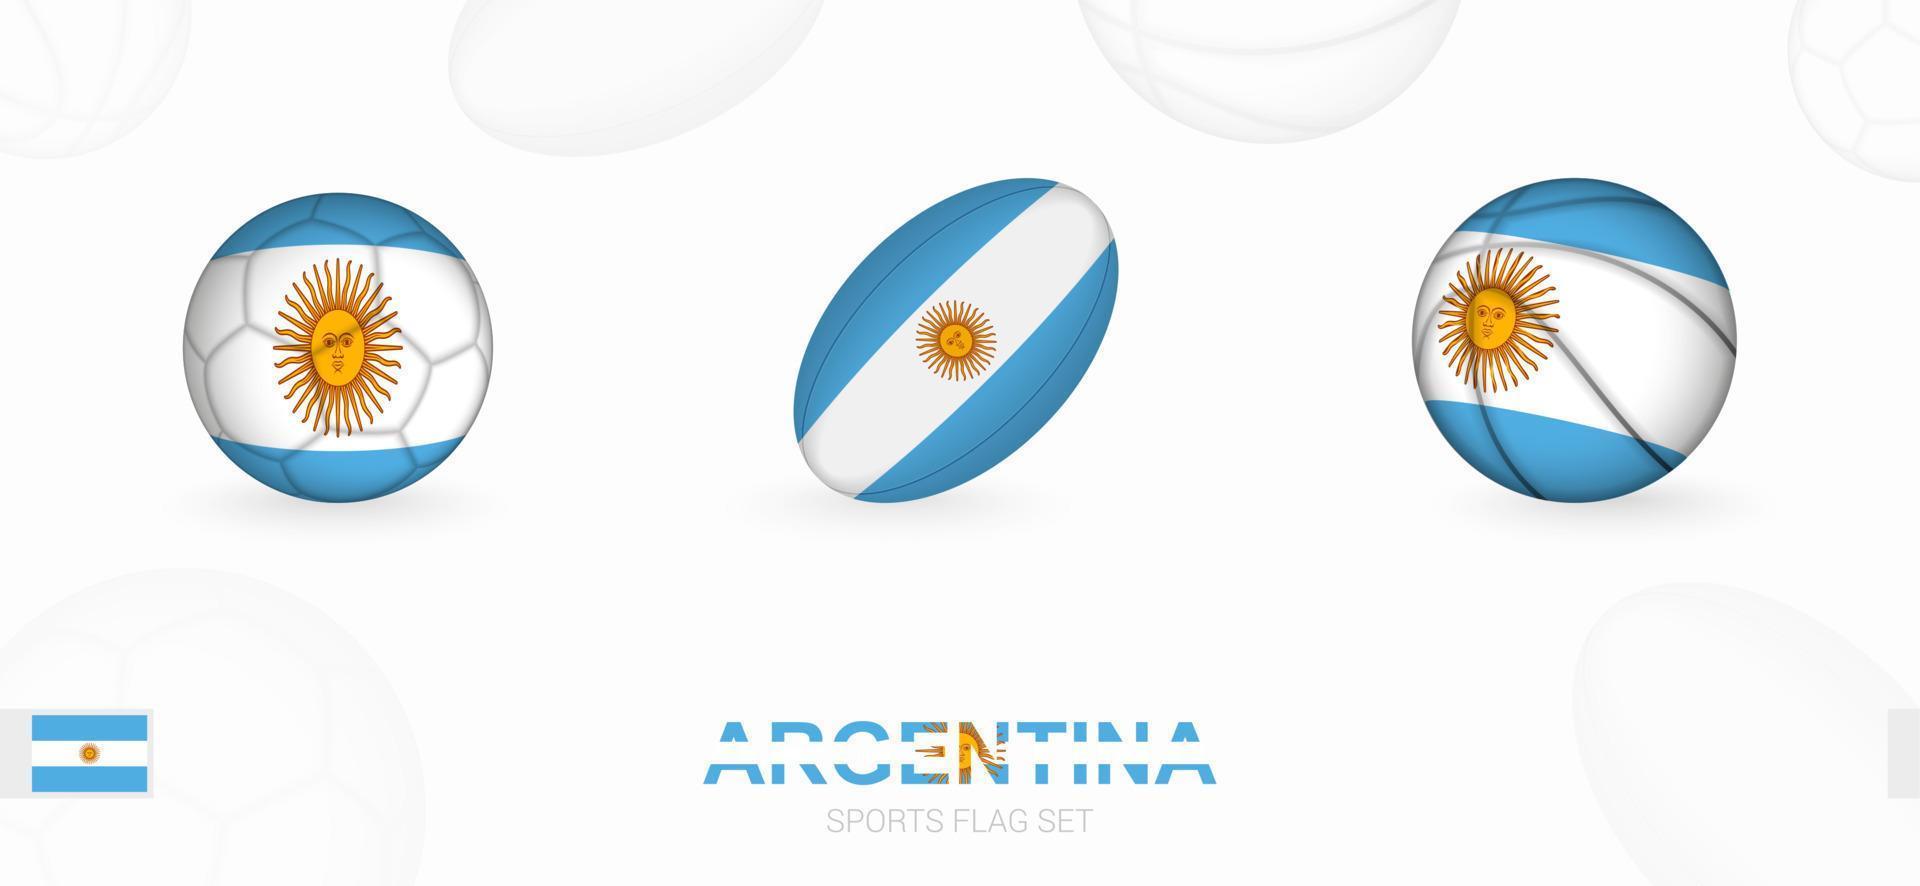 sport- pictogrammen voor Amerikaans voetbal, rugby en basketbal met de vlag van Argentinië. vector